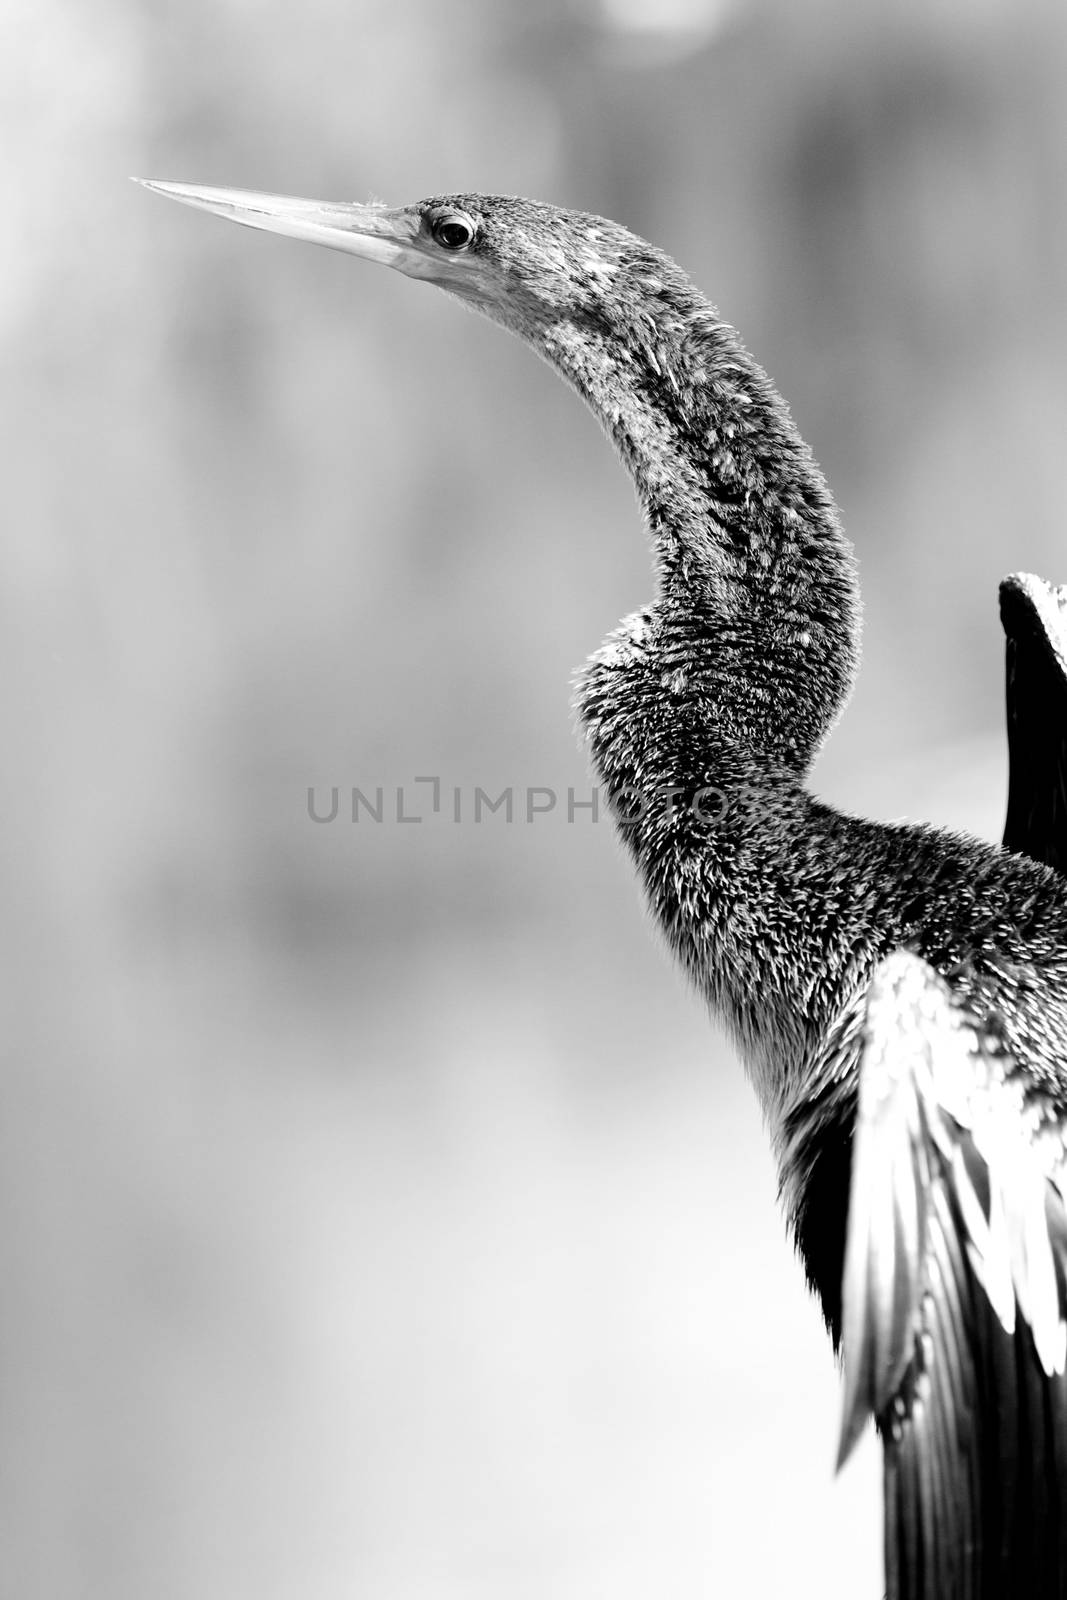 Bird with long neck by CelsoDiniz